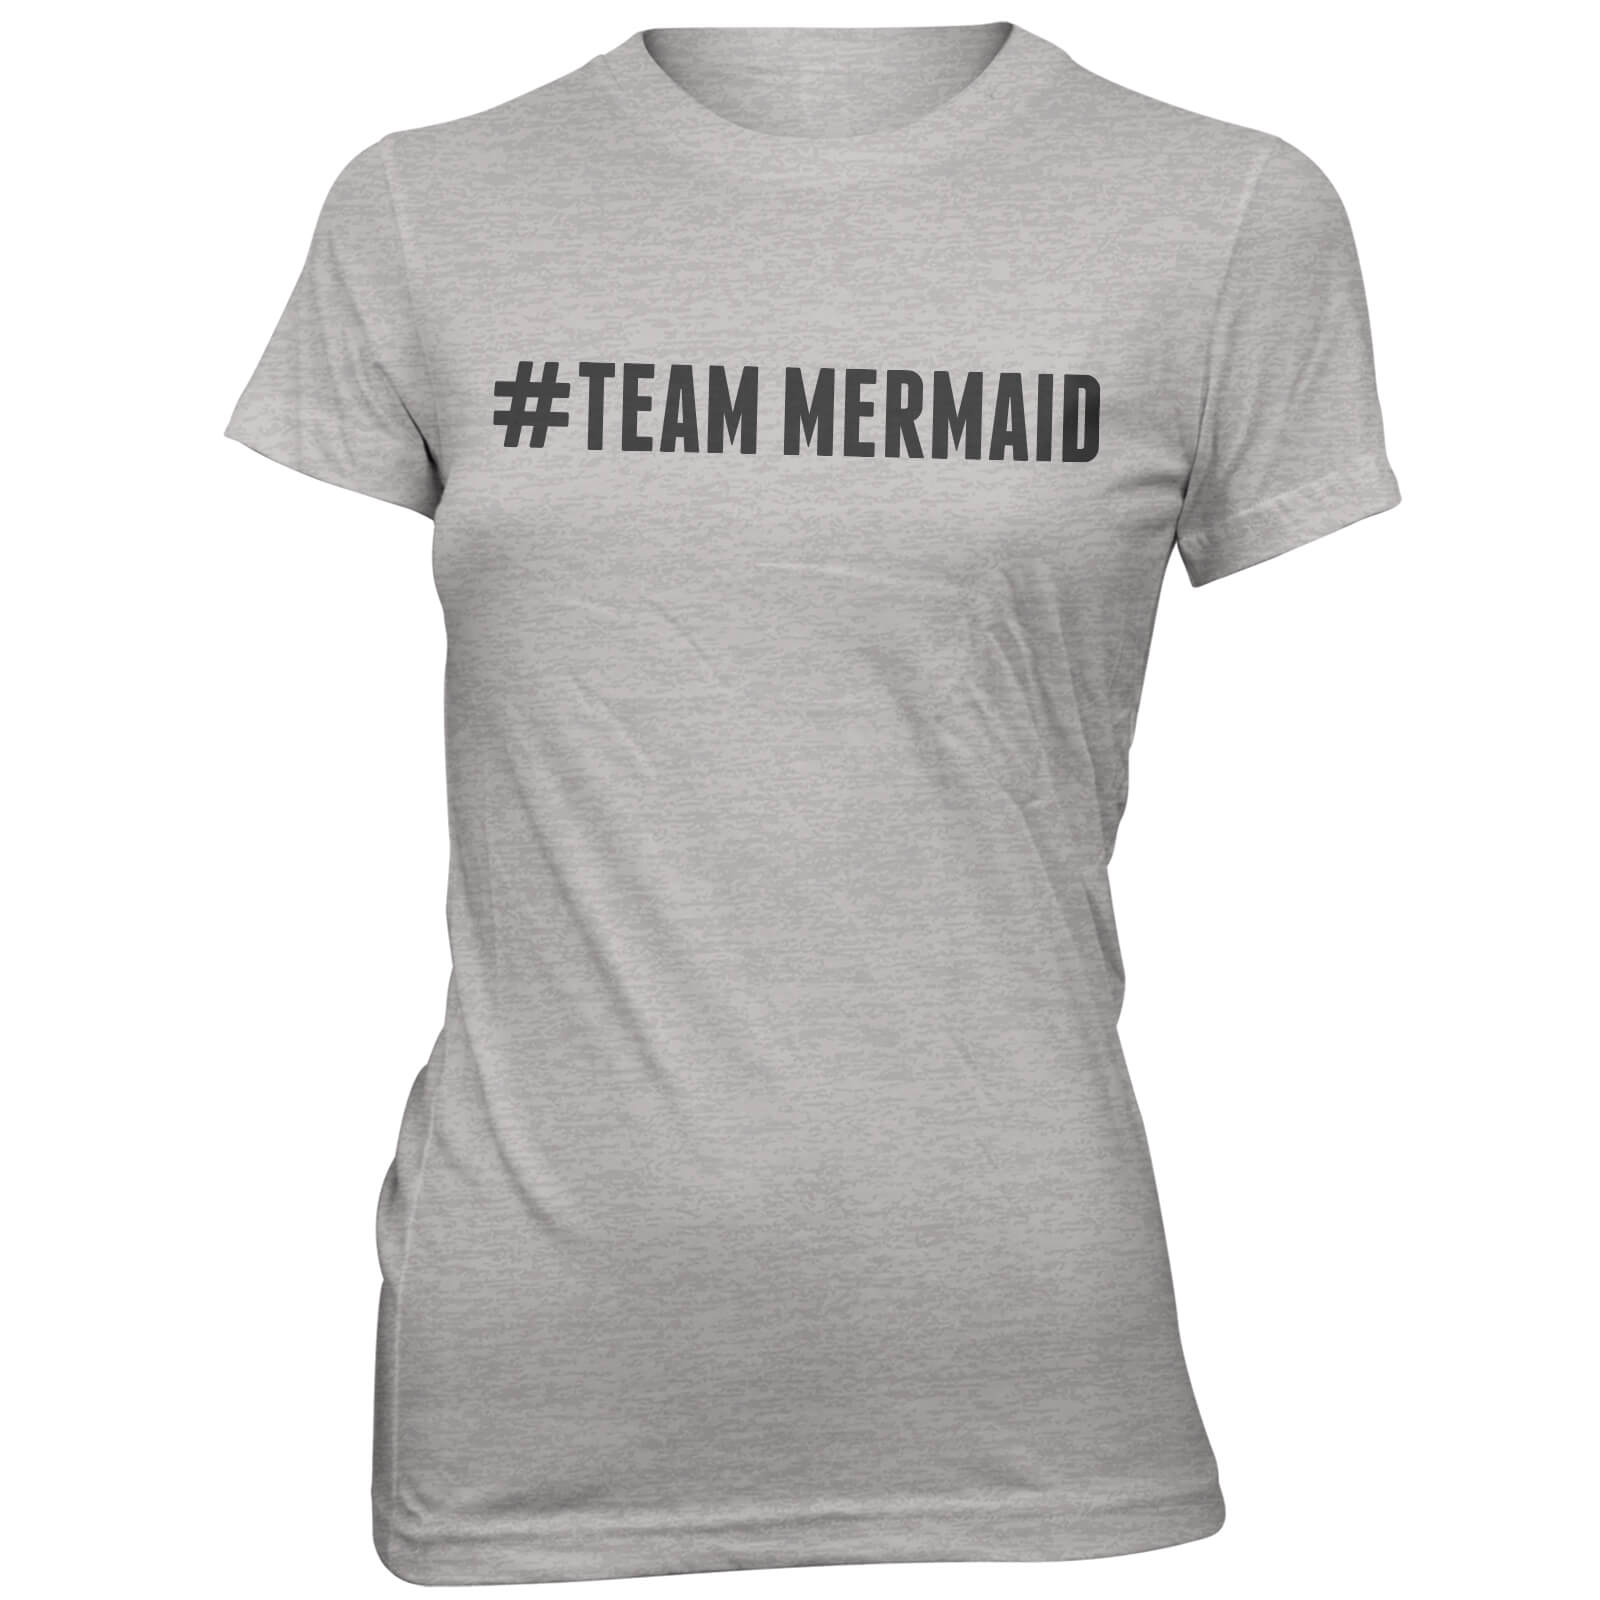 Hashtag Team Mermaid Women's Grey T-Shirt - S - Grey